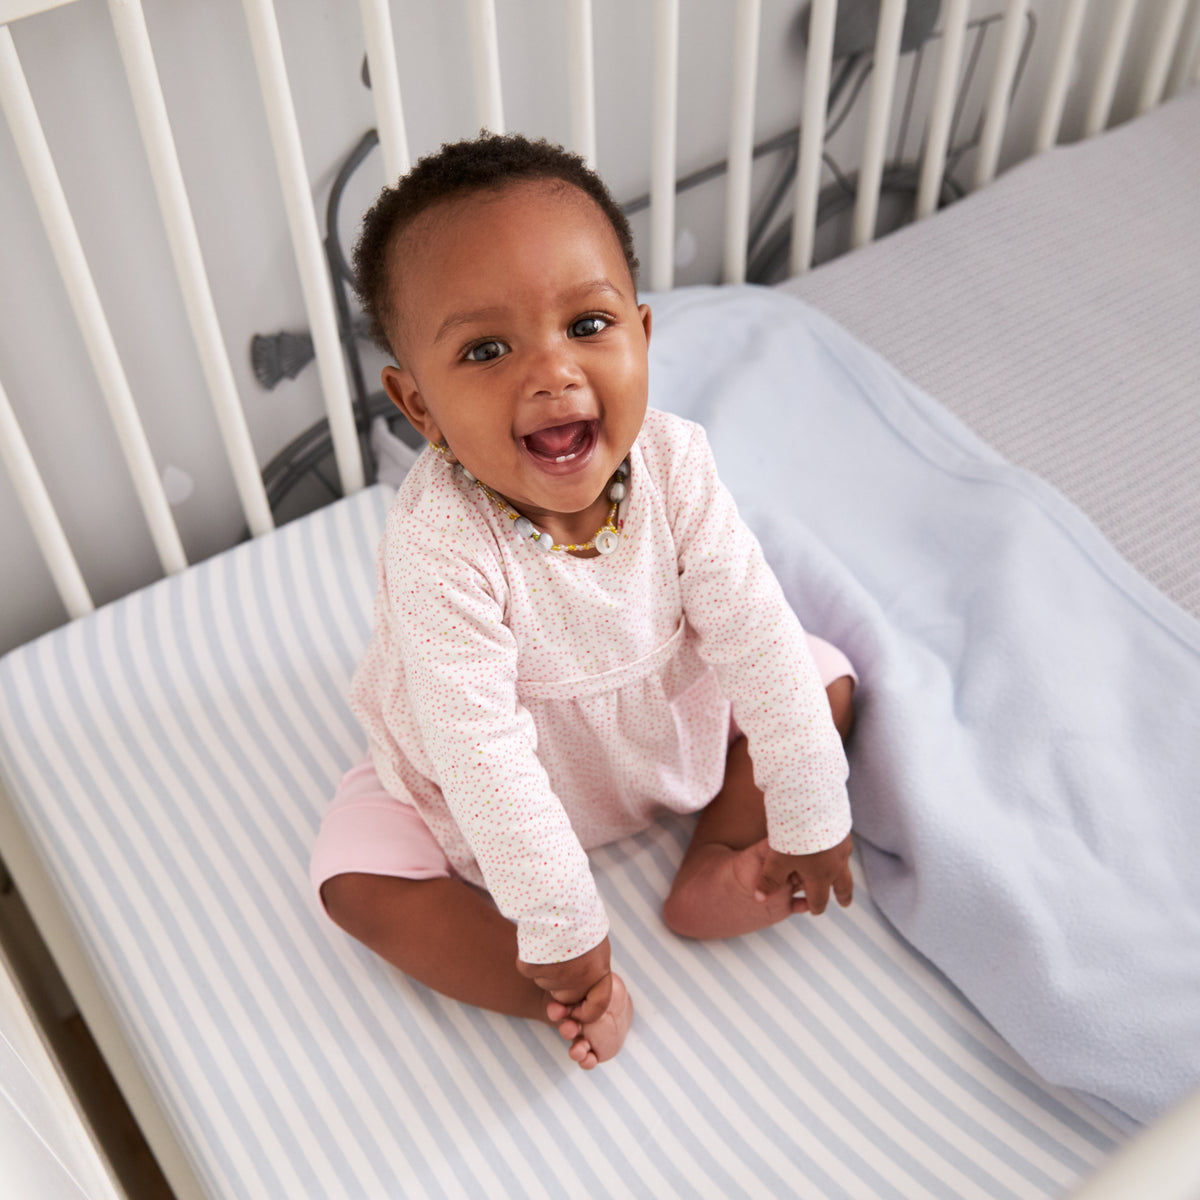 Cuna colecho para bebé: ¿cuál escoger?